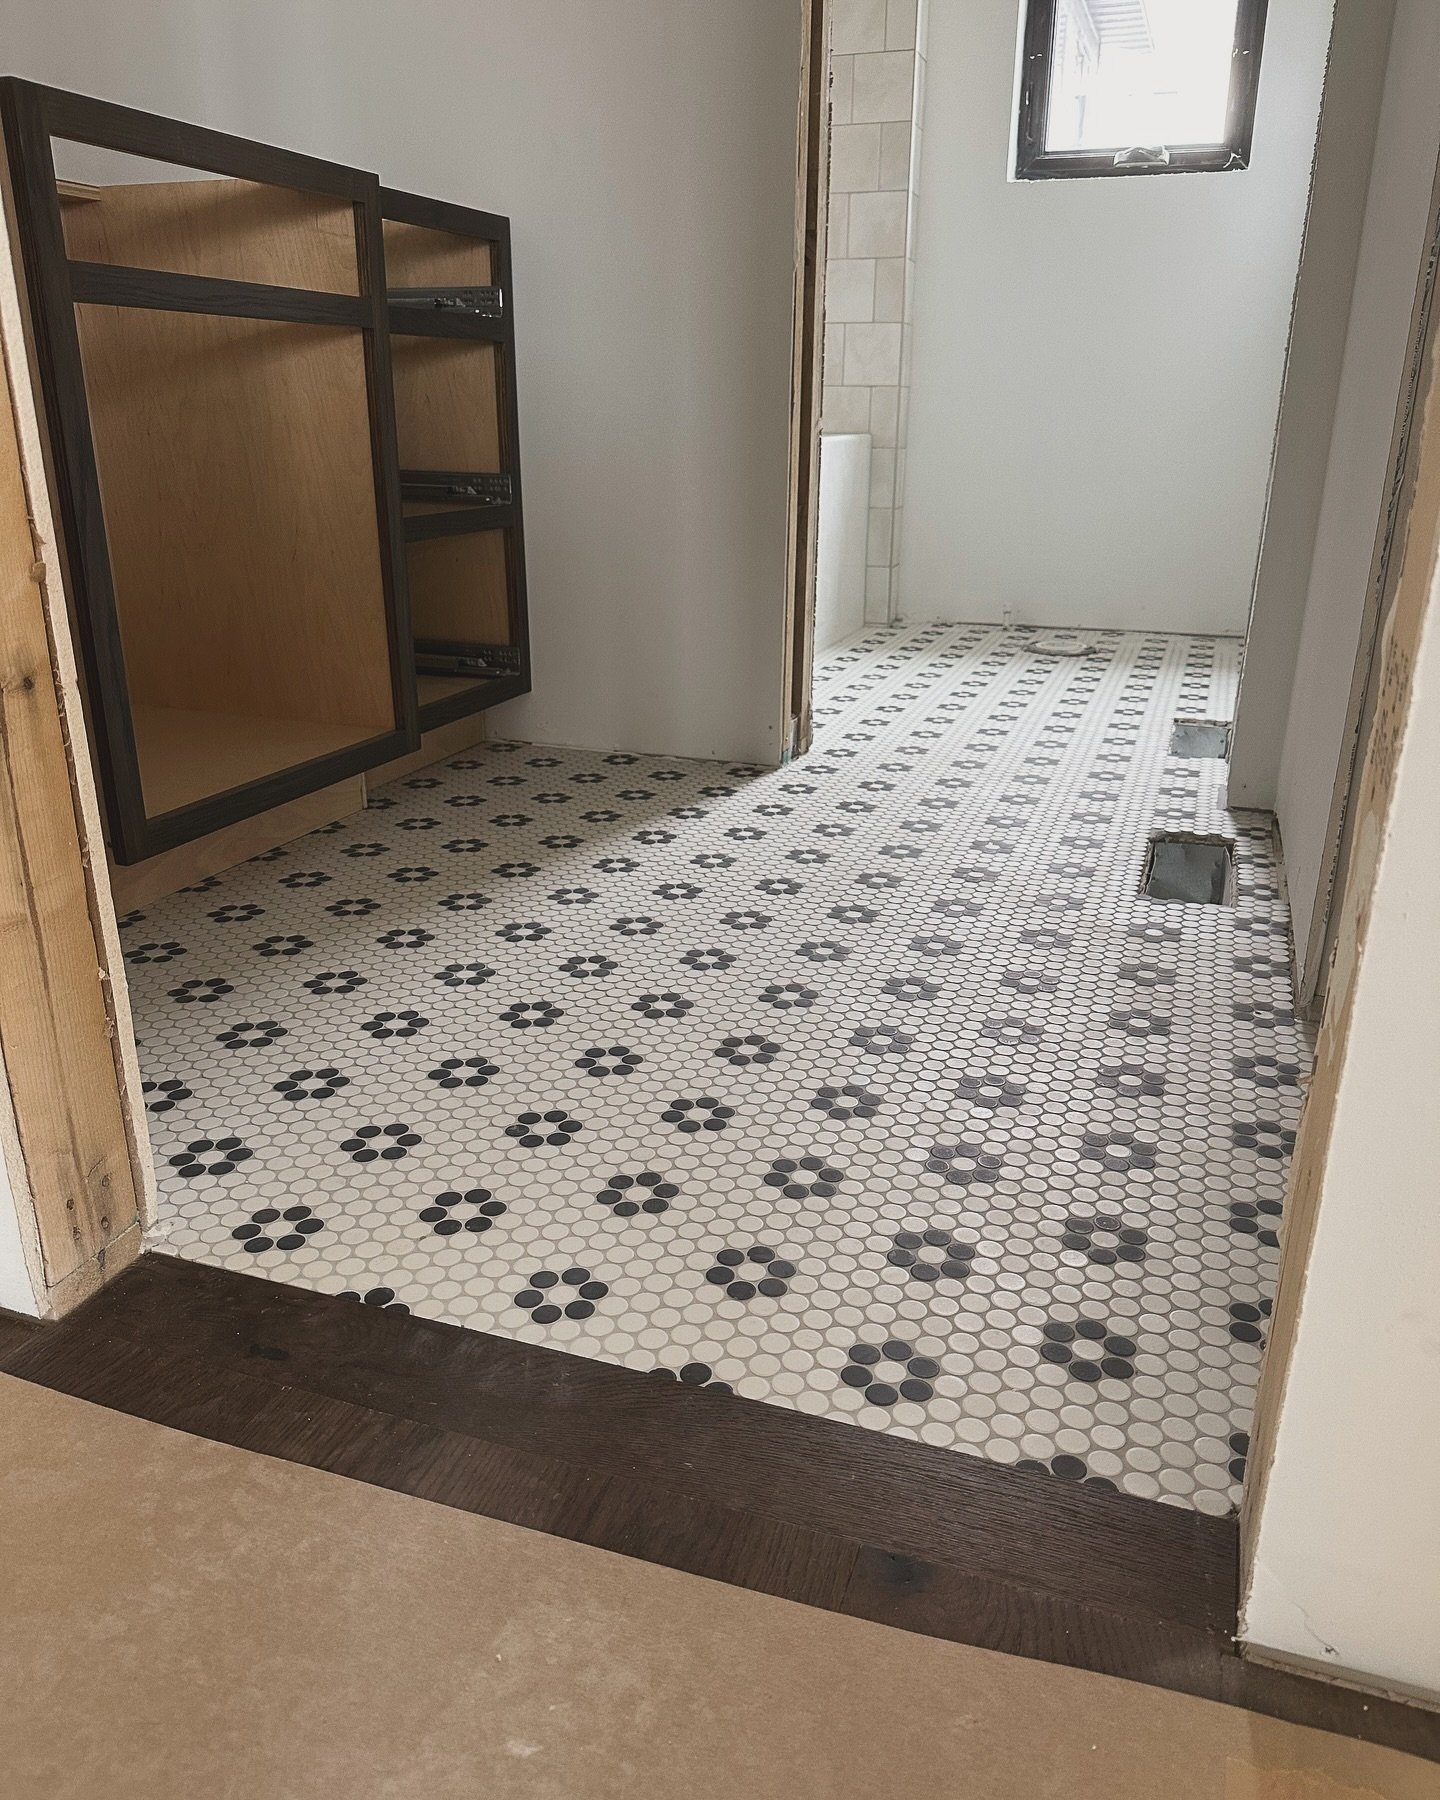 Classic penny tile, chocolate-toned cabinets, warm-white tiled shower&hellip;. The perfect combo for our Stone Chateau hallway bathroom!

@stuarttile 
@randysflooring 
@alexbuildsinc